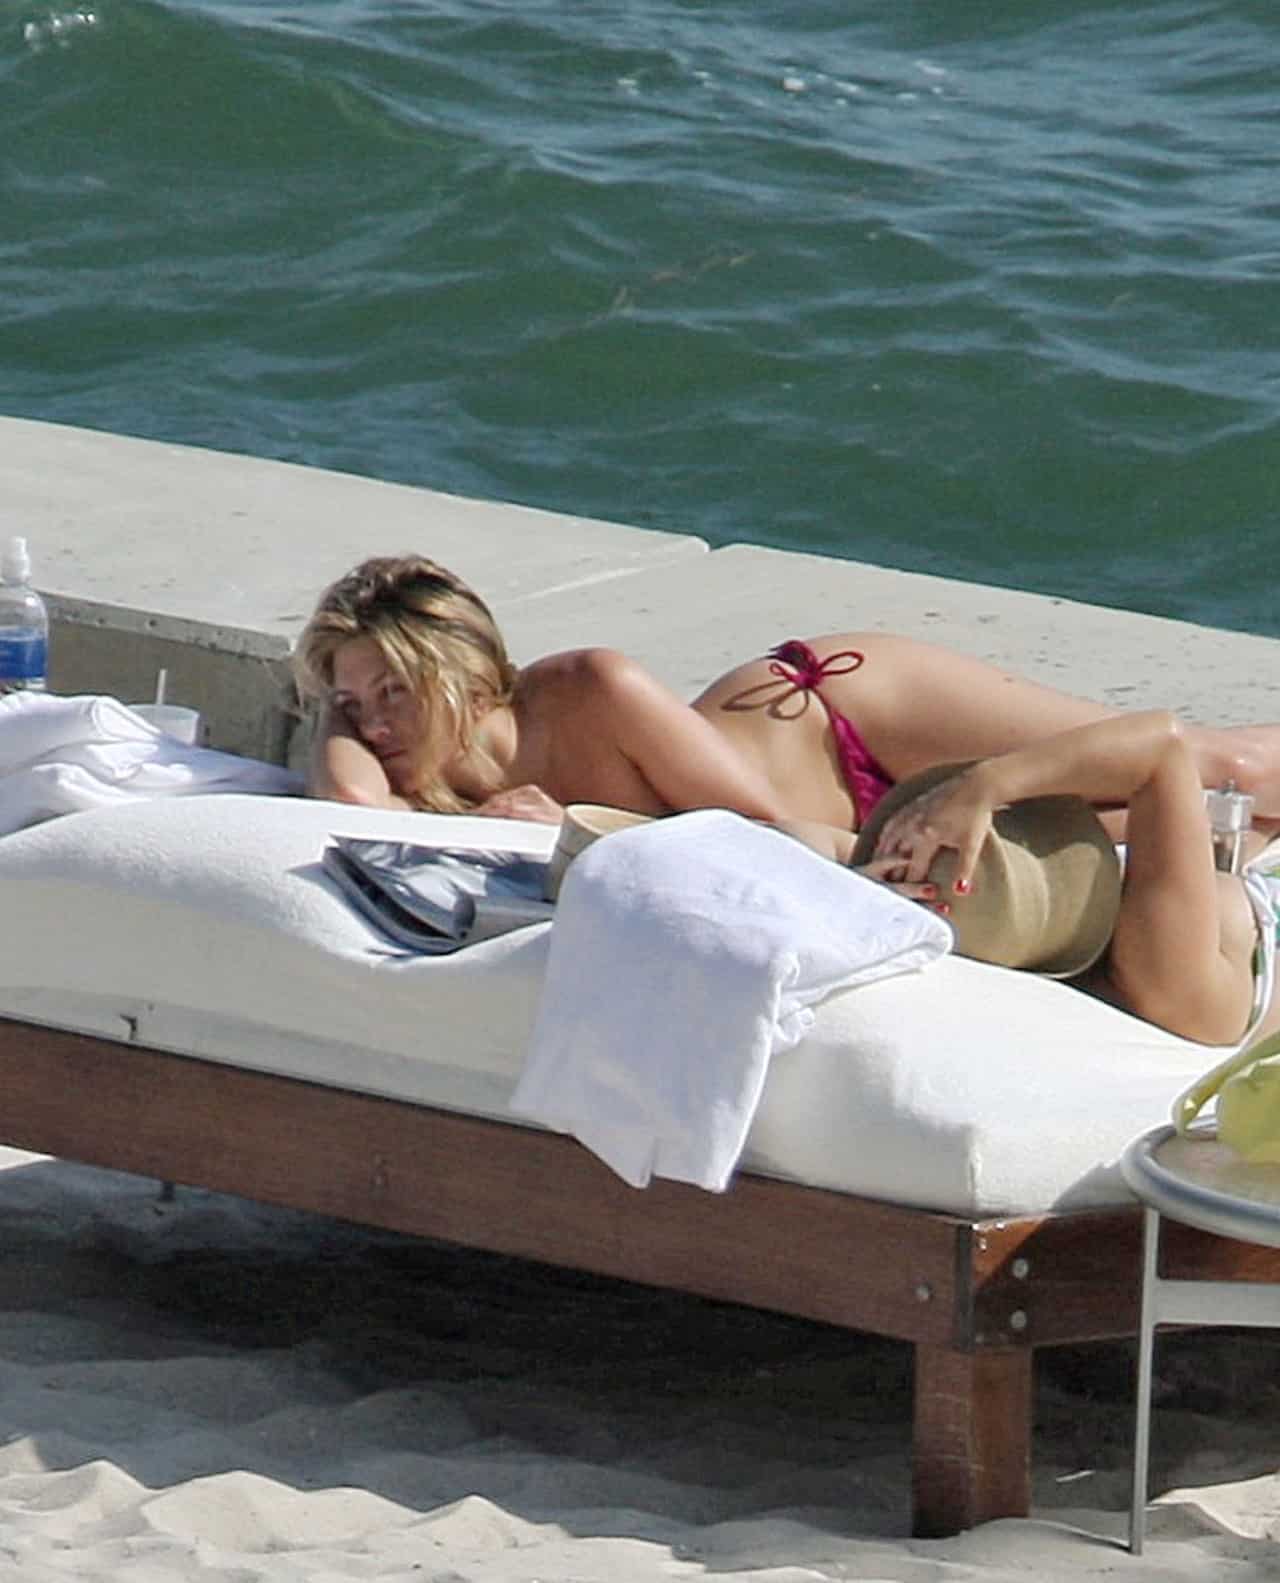 Jennifer Aniston Shows Off Her Figure in a Pink Bikini in Miami